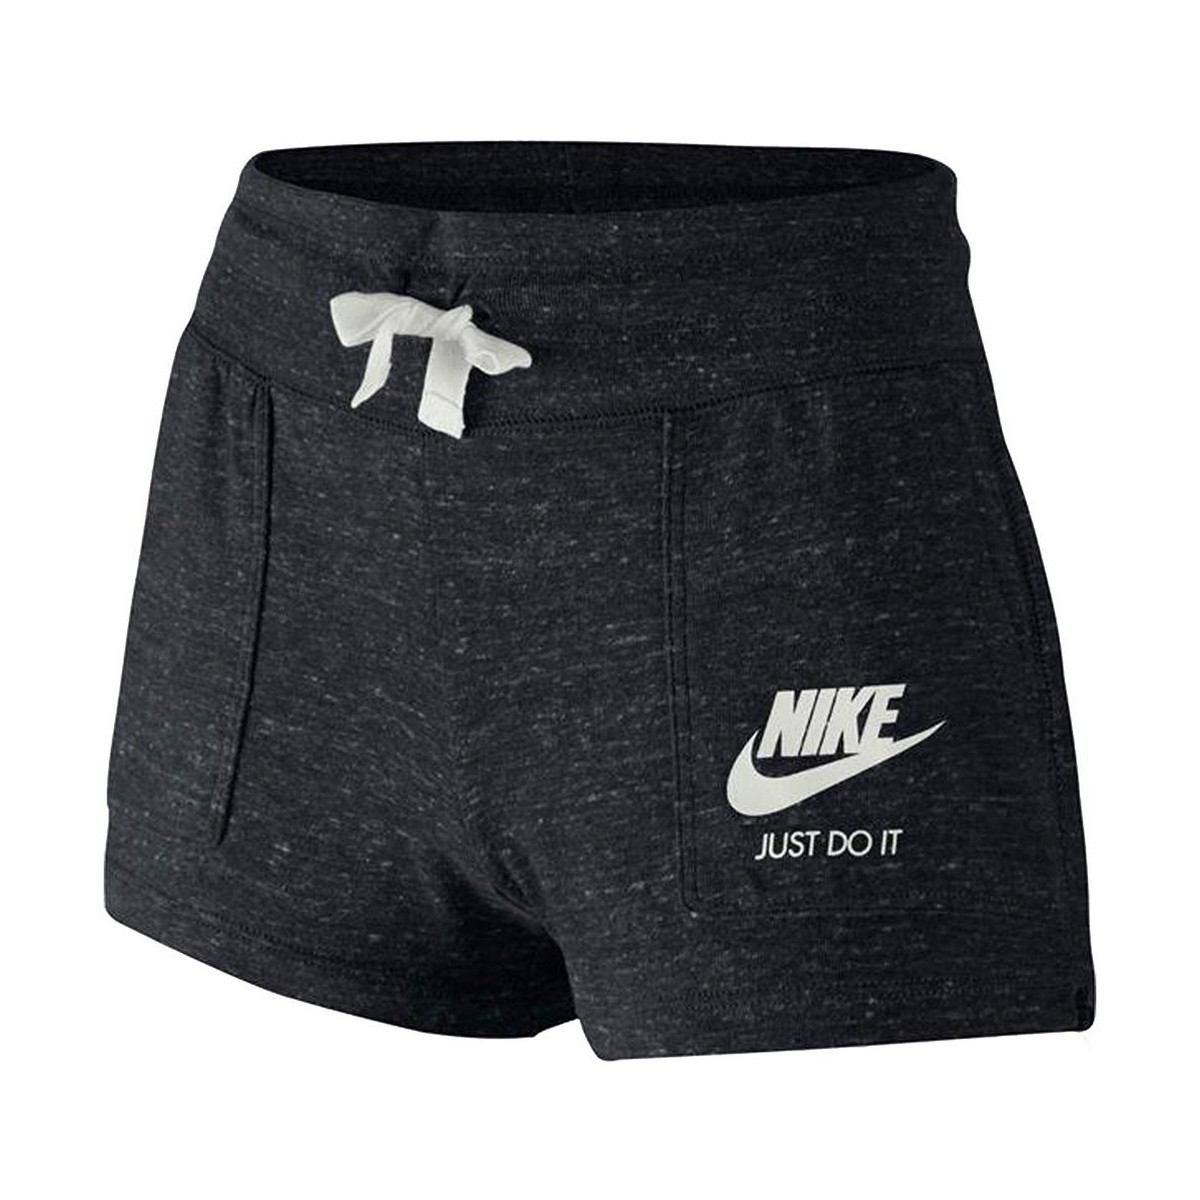 Îmbracaminte Băieți Pantaloni trei sferturi Nike Gym Vintage Negru